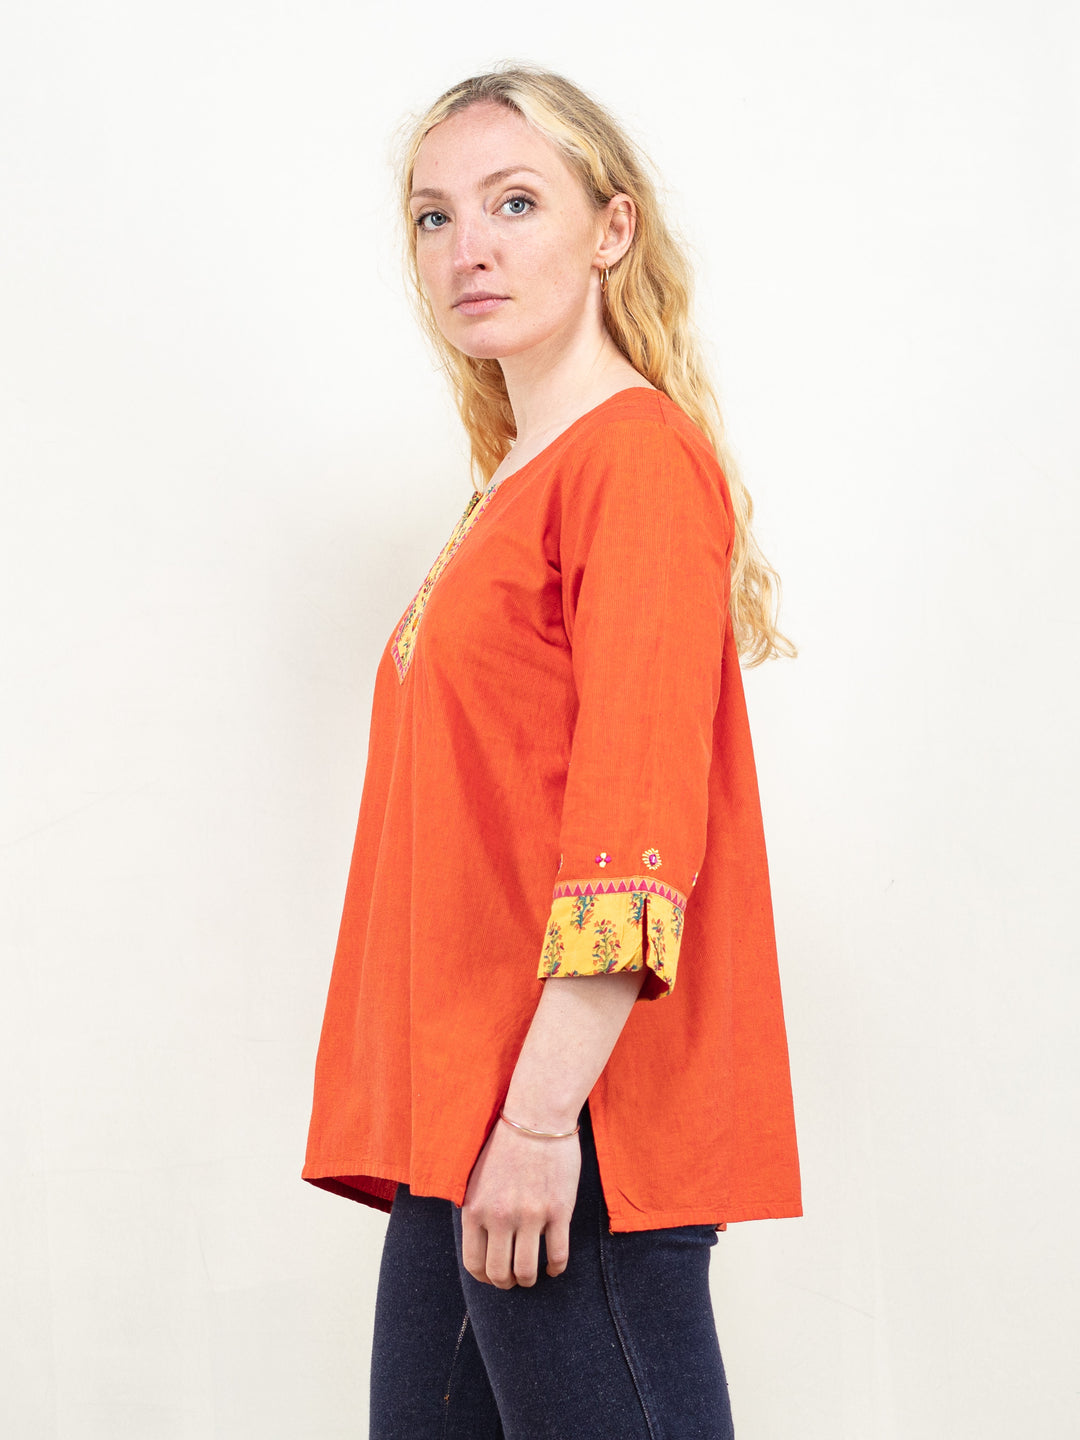 Women Longline Shirt 80's cotton tunic shirt patterned traditional shirt split neckline top bracelet sleeve orange striped top size small